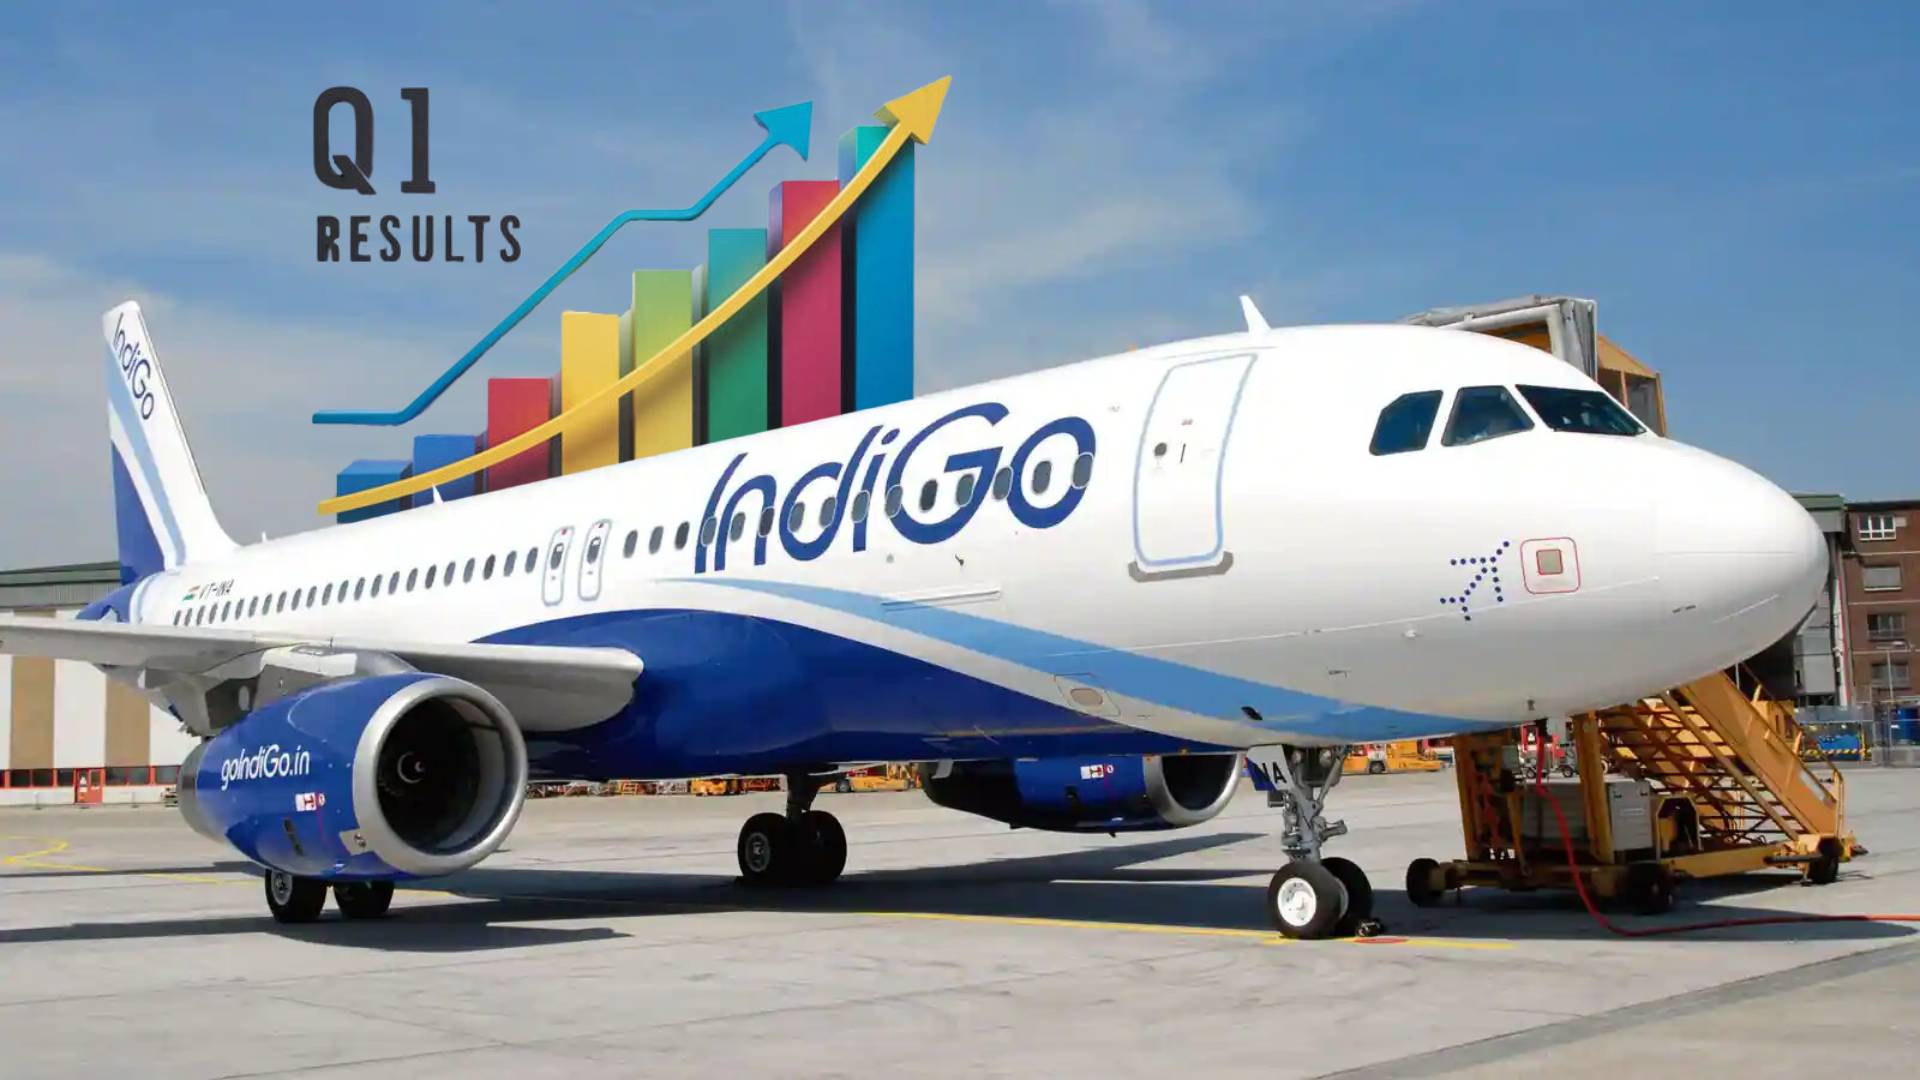 IndiGo Q1 Results: Revenue Up 17%, Net Profit Down 11% for April-June Quarter